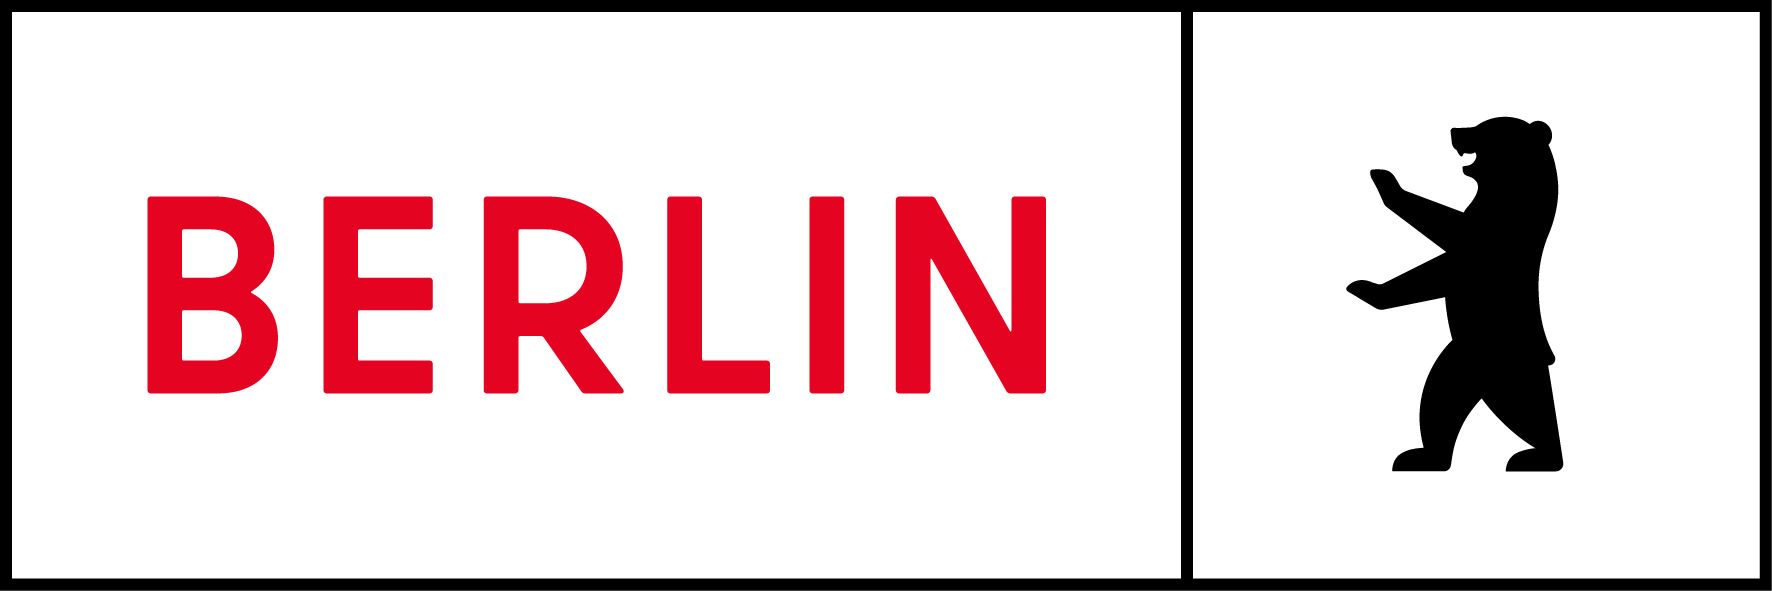 2. Berlin